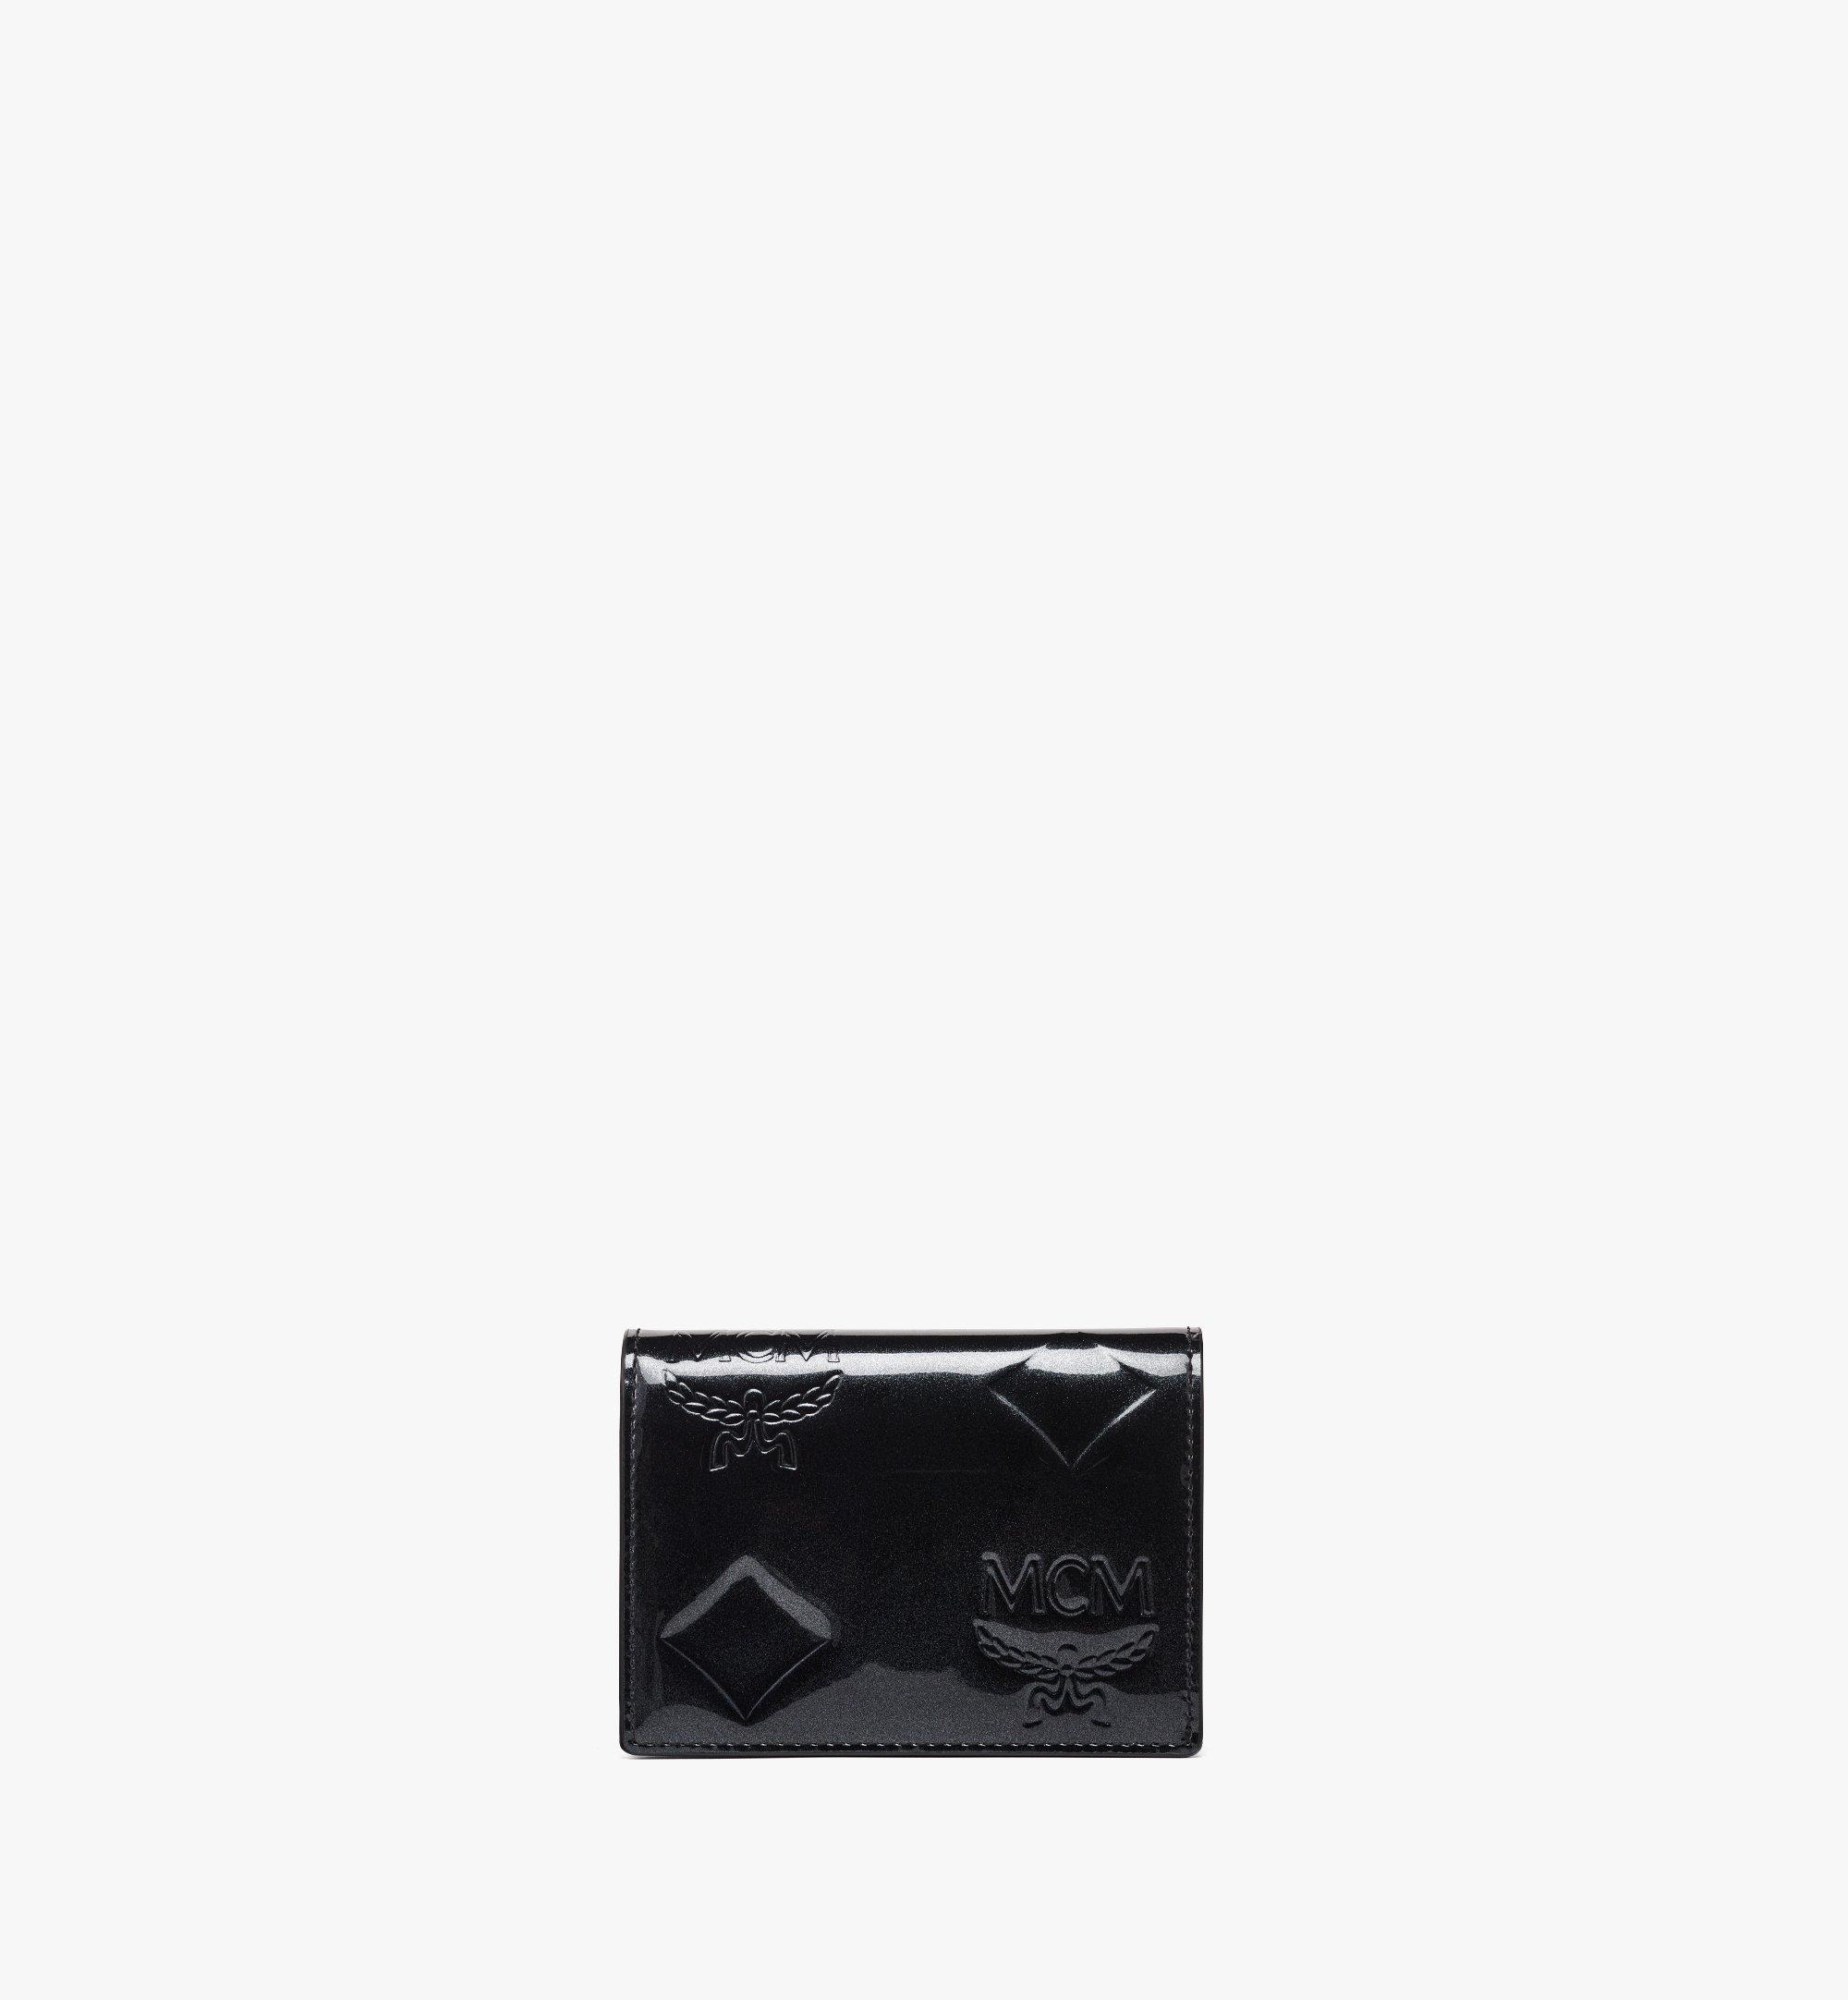 MCM Aren Bifold Snap Wallet in Maxi Patent Leather Black MYSDATA02BK001 Alternate View 1